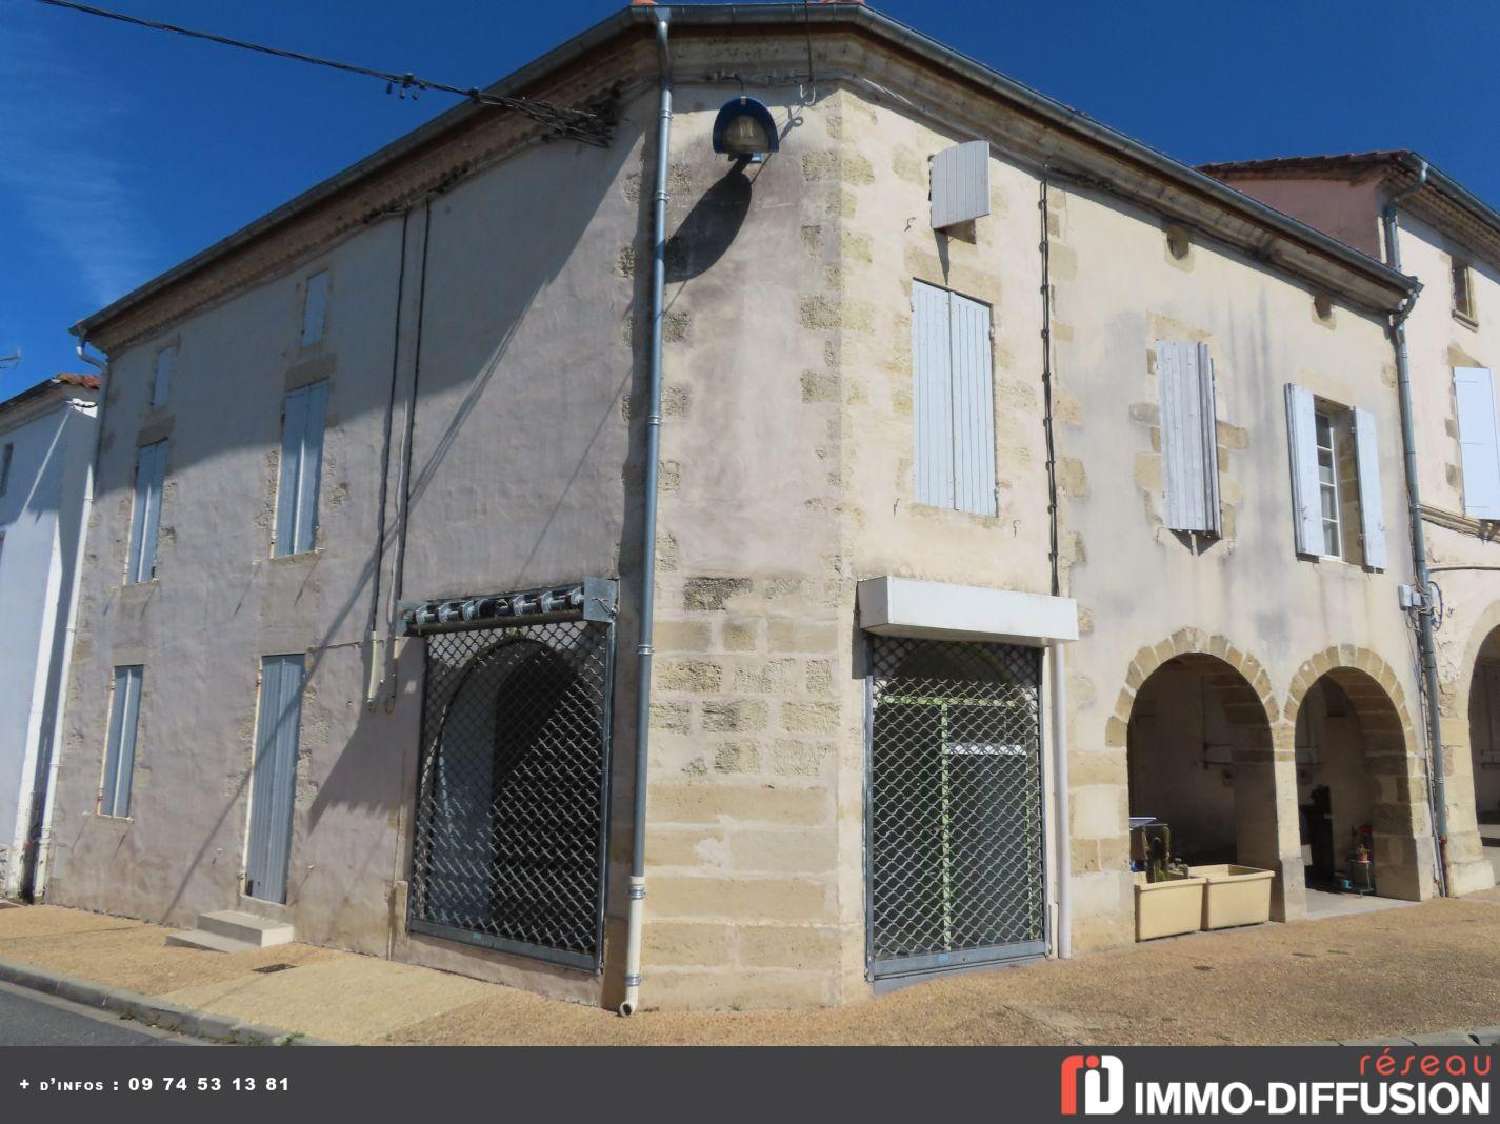  for sale house Auros Gironde 1